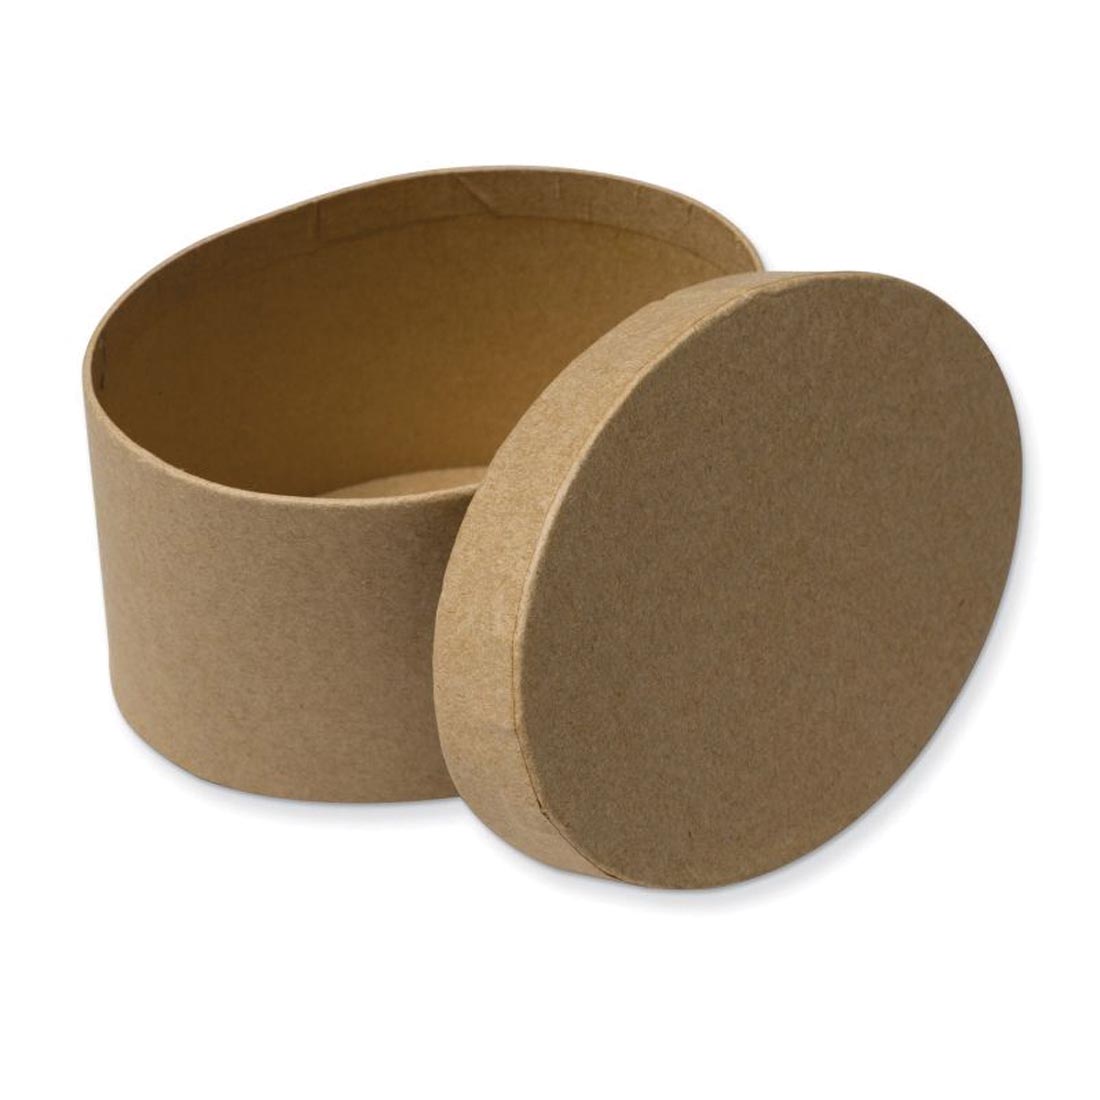 Creativity Street Papier Mache Oval Box with lid off